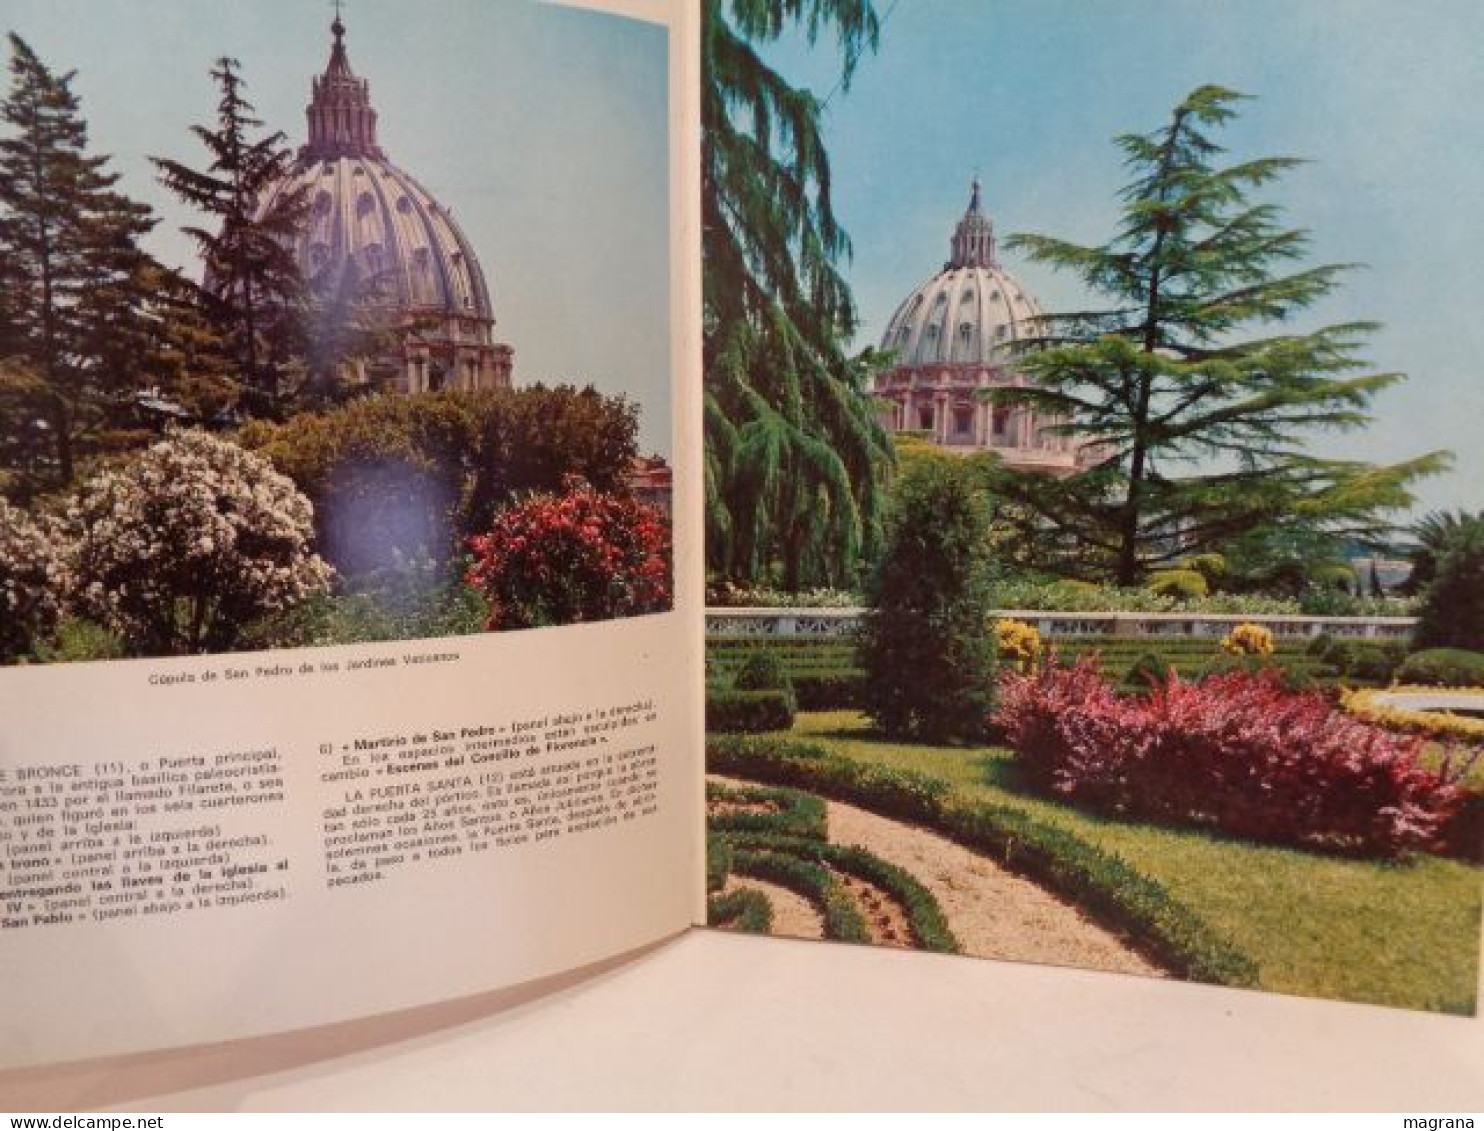 Ciudad del Vaticano. Santini Loretta. Edizioni Fotorapidacolor. 1971. 127 pp. Idioma: Español.